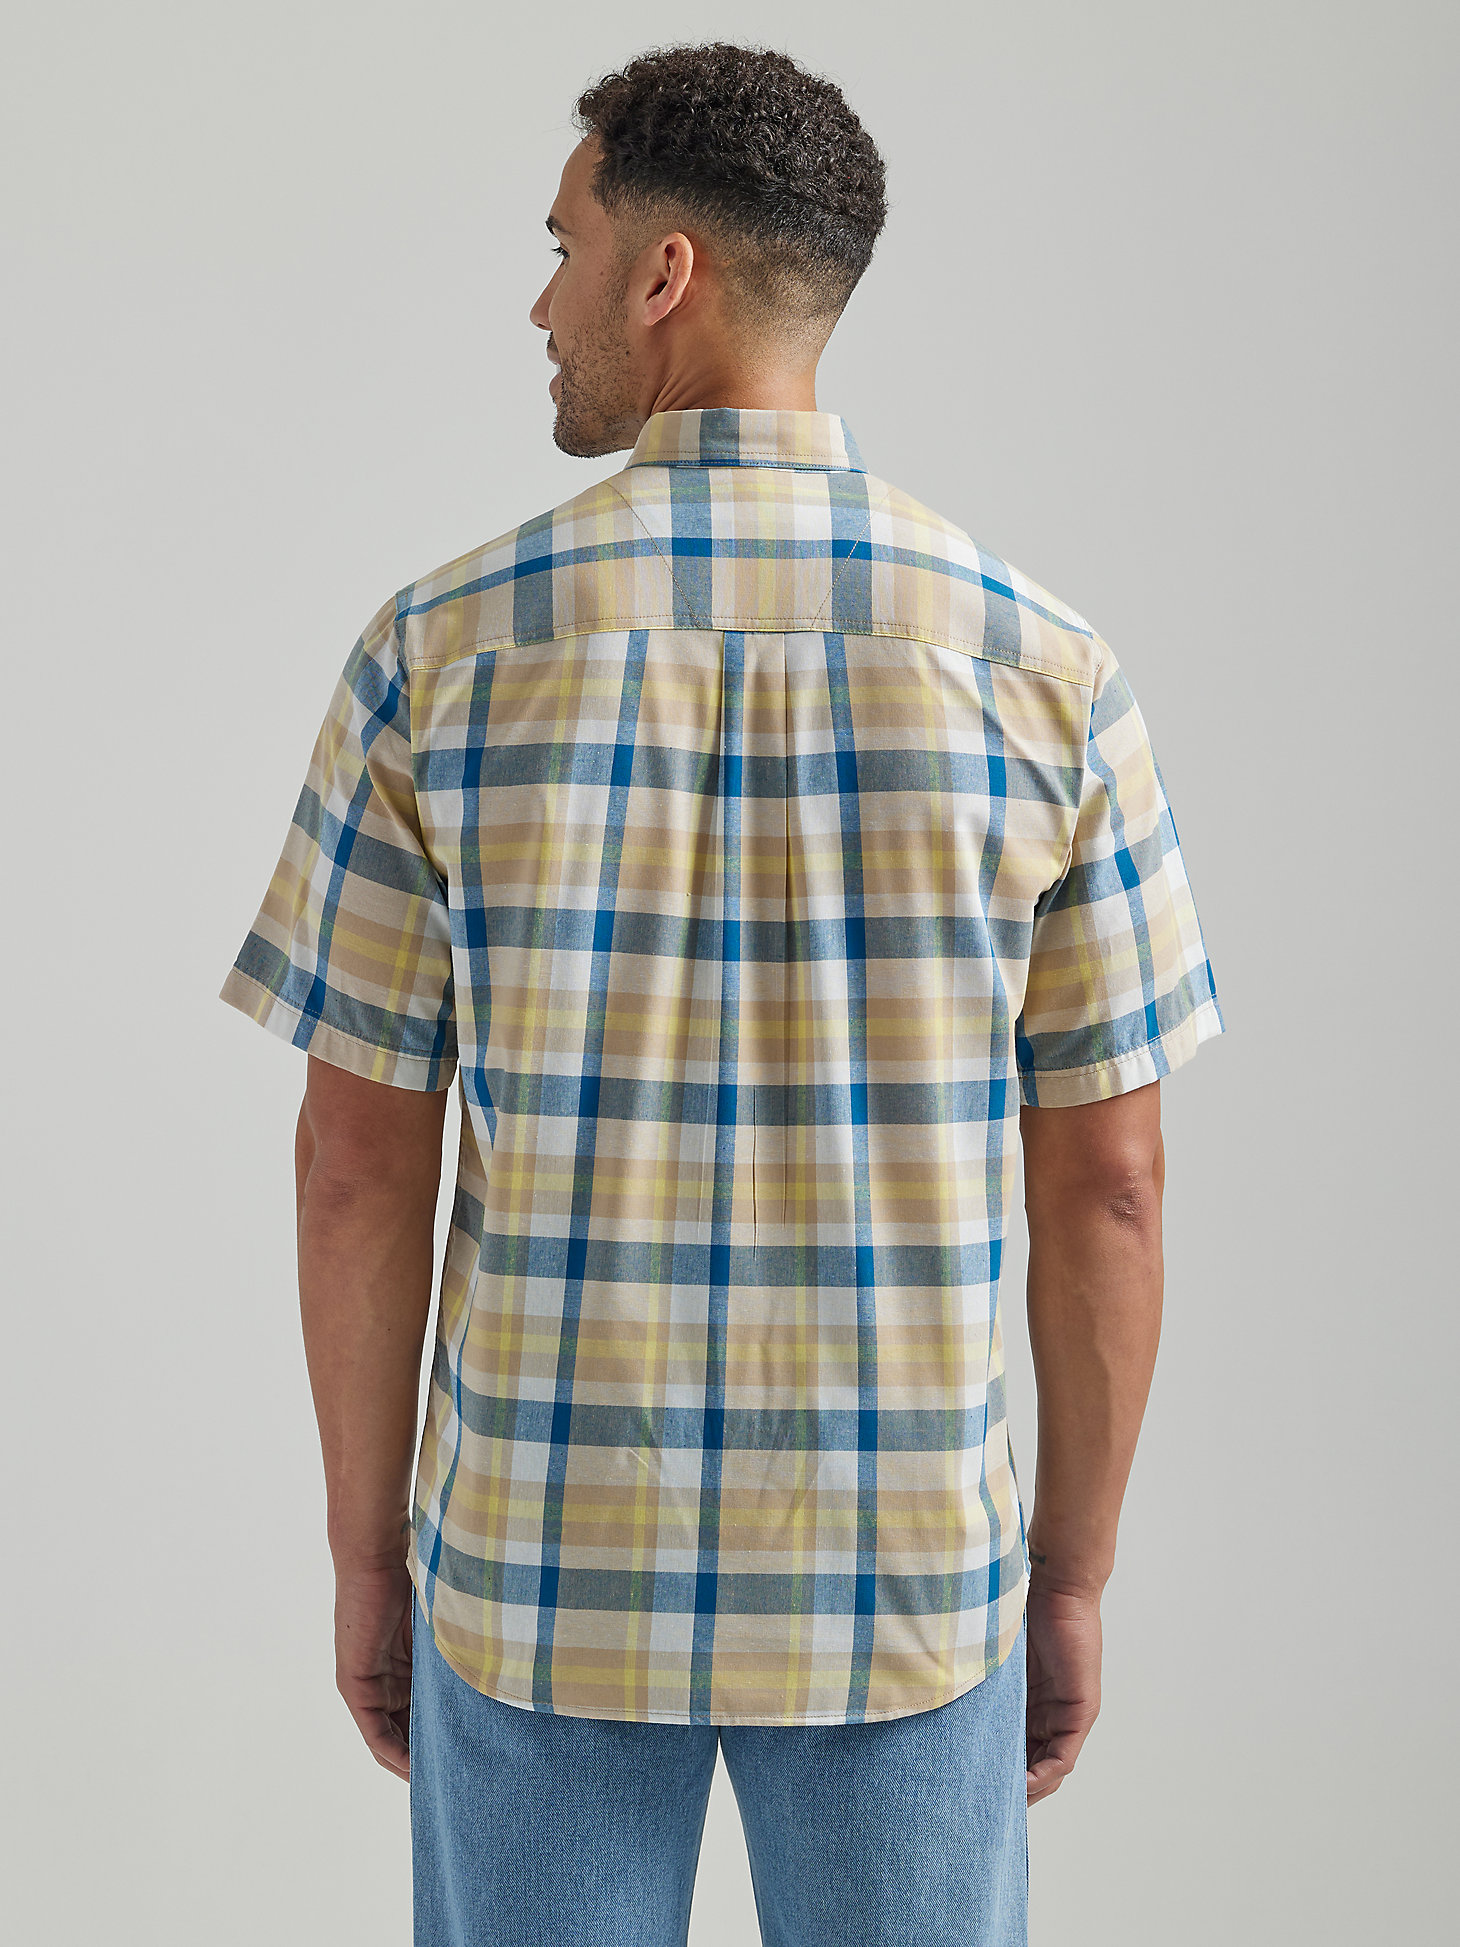 Wrangler Rugged Wear® Short Sleeve Easy Care Plaid Button-Down Shirt in Khaki Blue alternative view 2